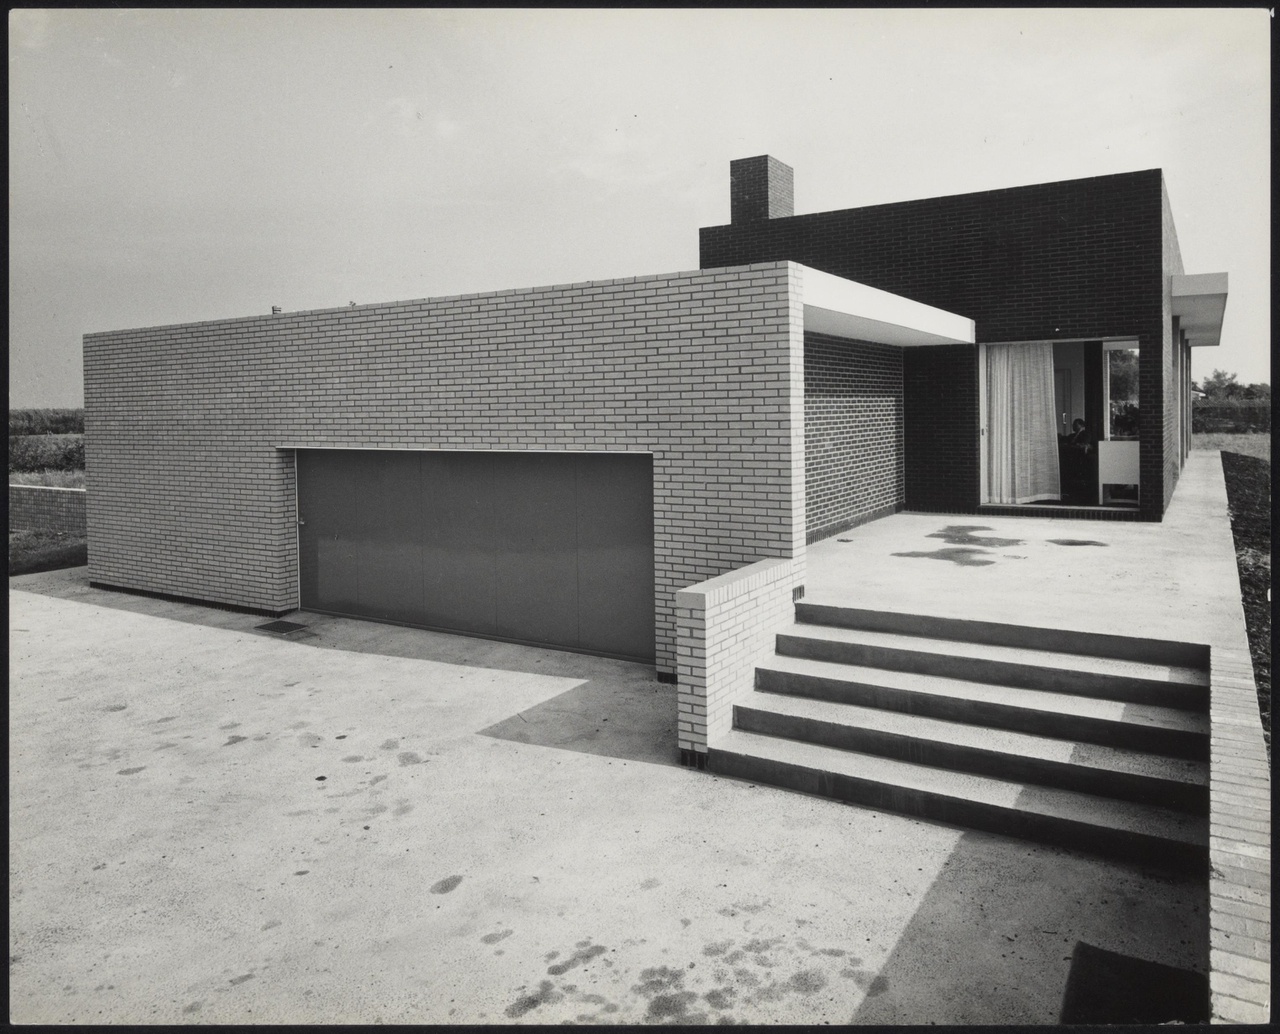 Afbeelding van woning Van den Doel, ca.1958, hoek westkant, langs zuidgevel